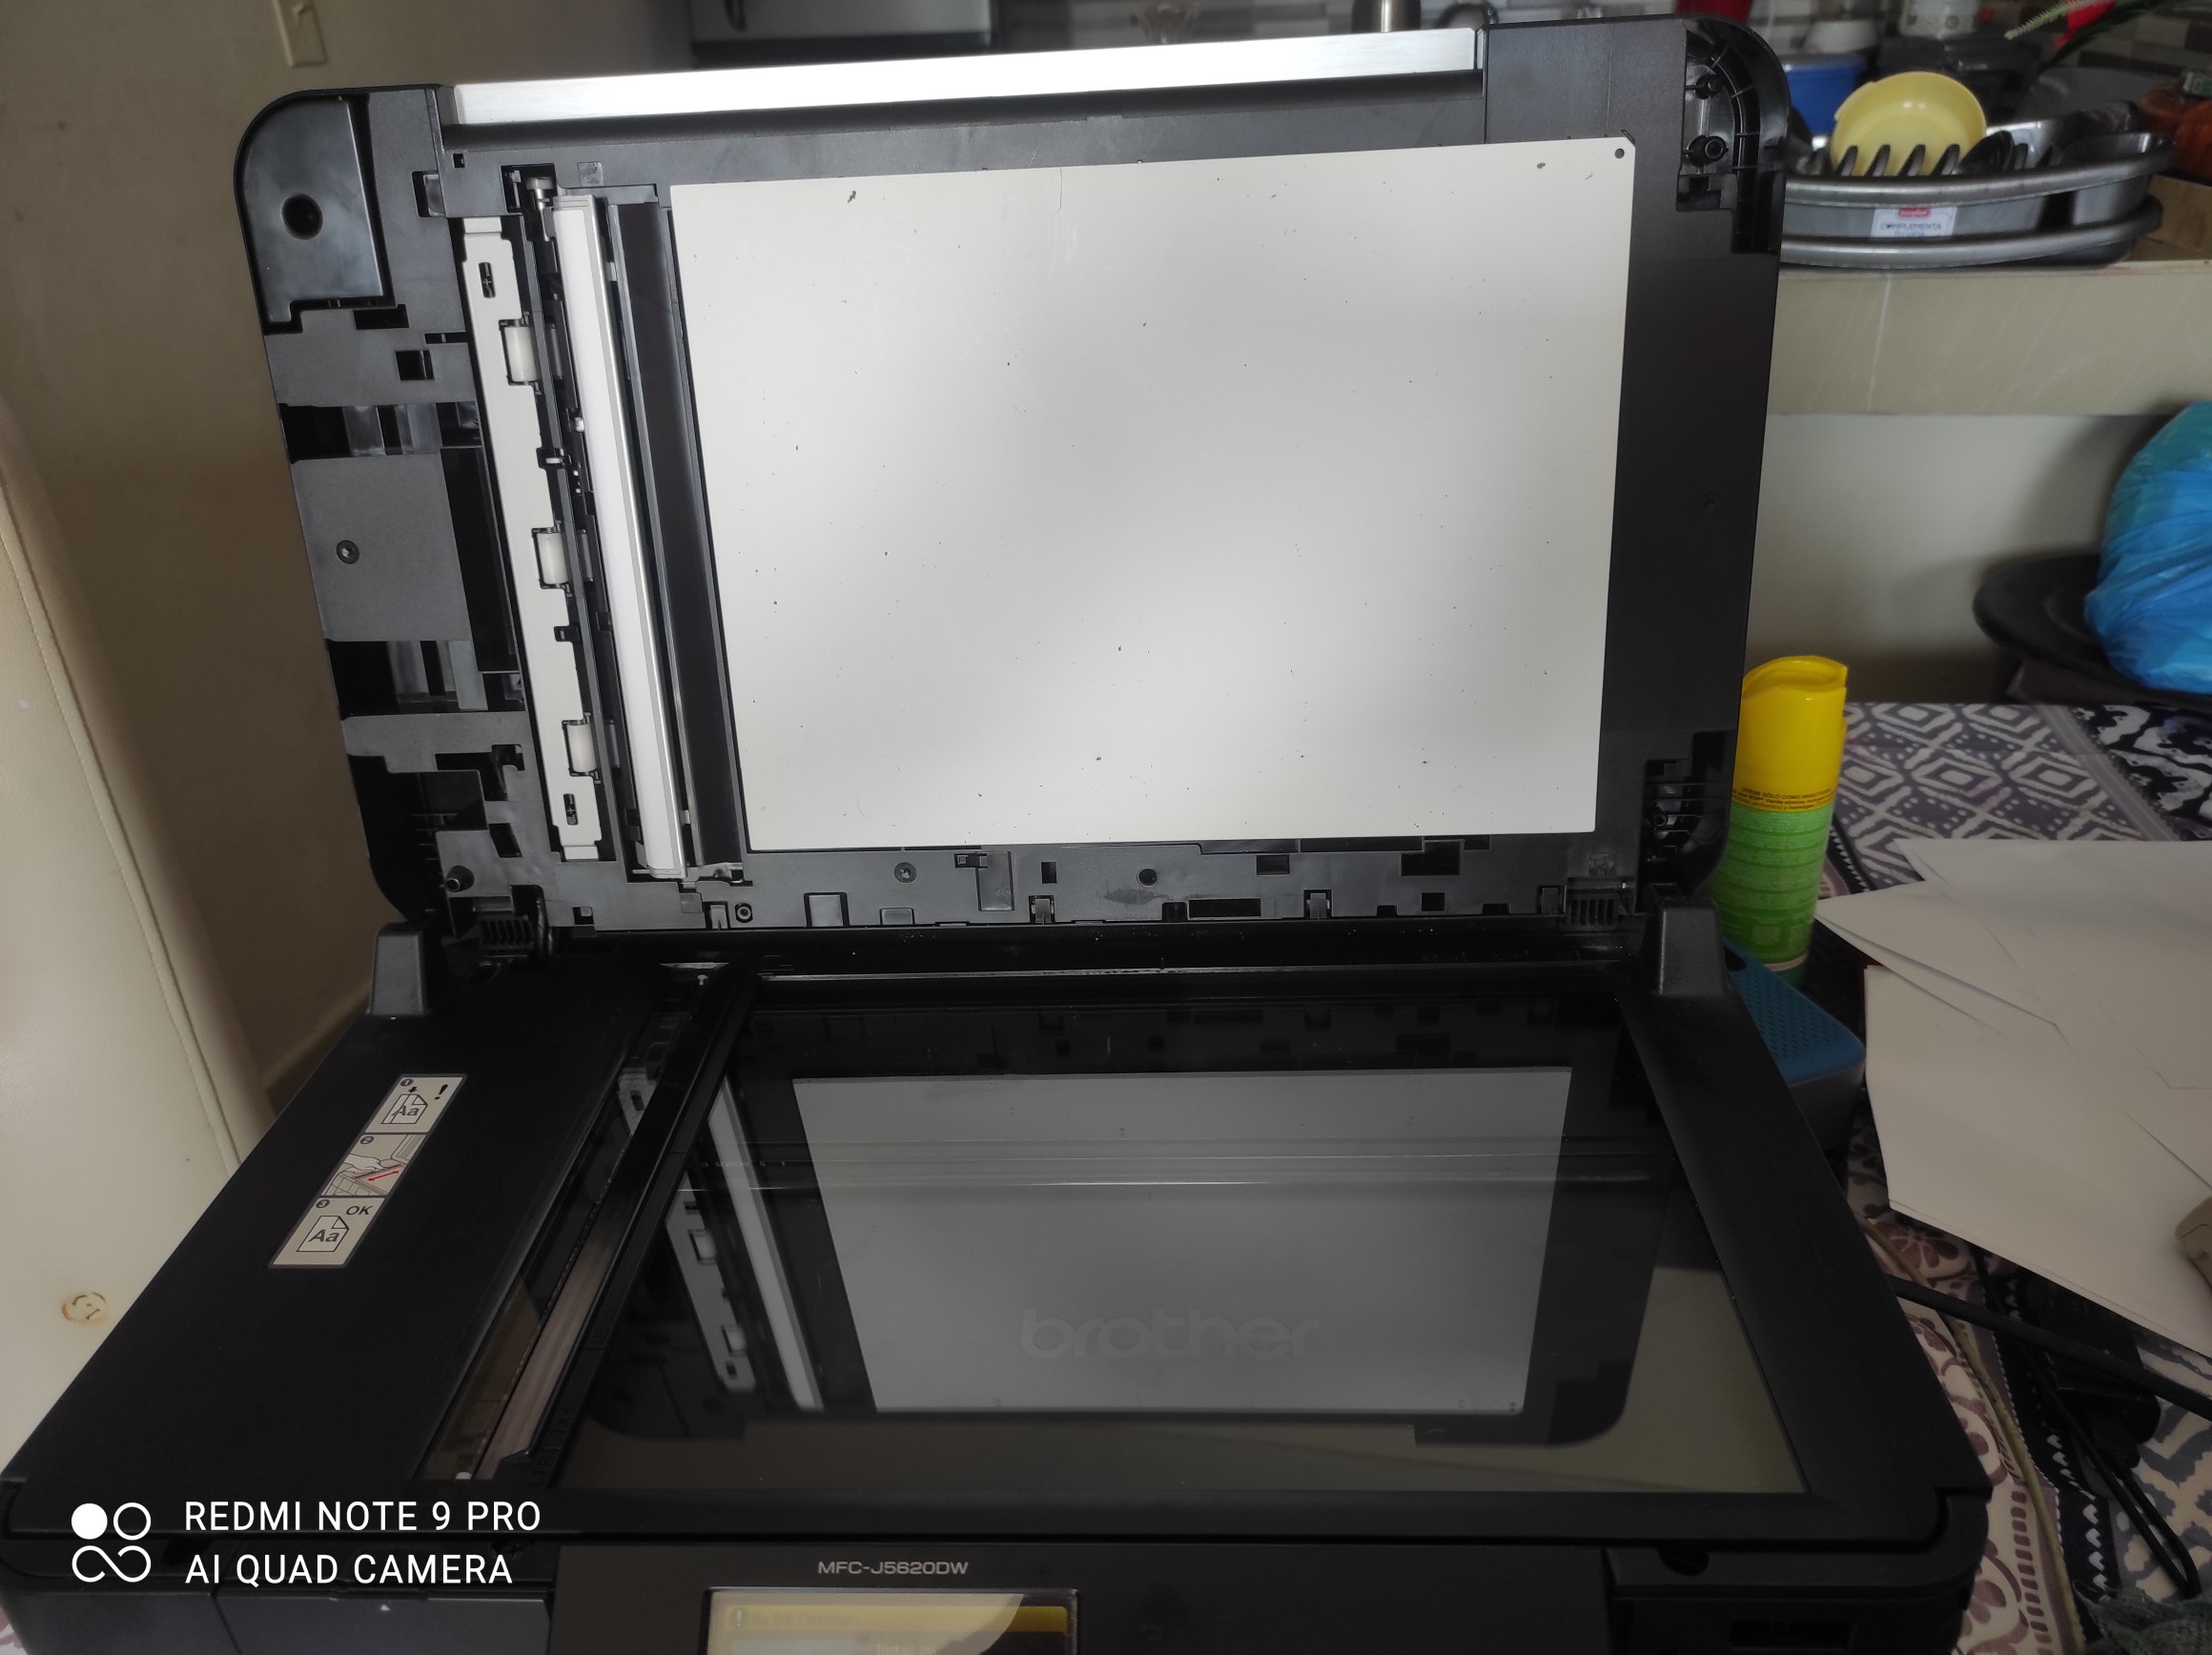 impresoras y scanners - Impresora multifuncional Brother 2